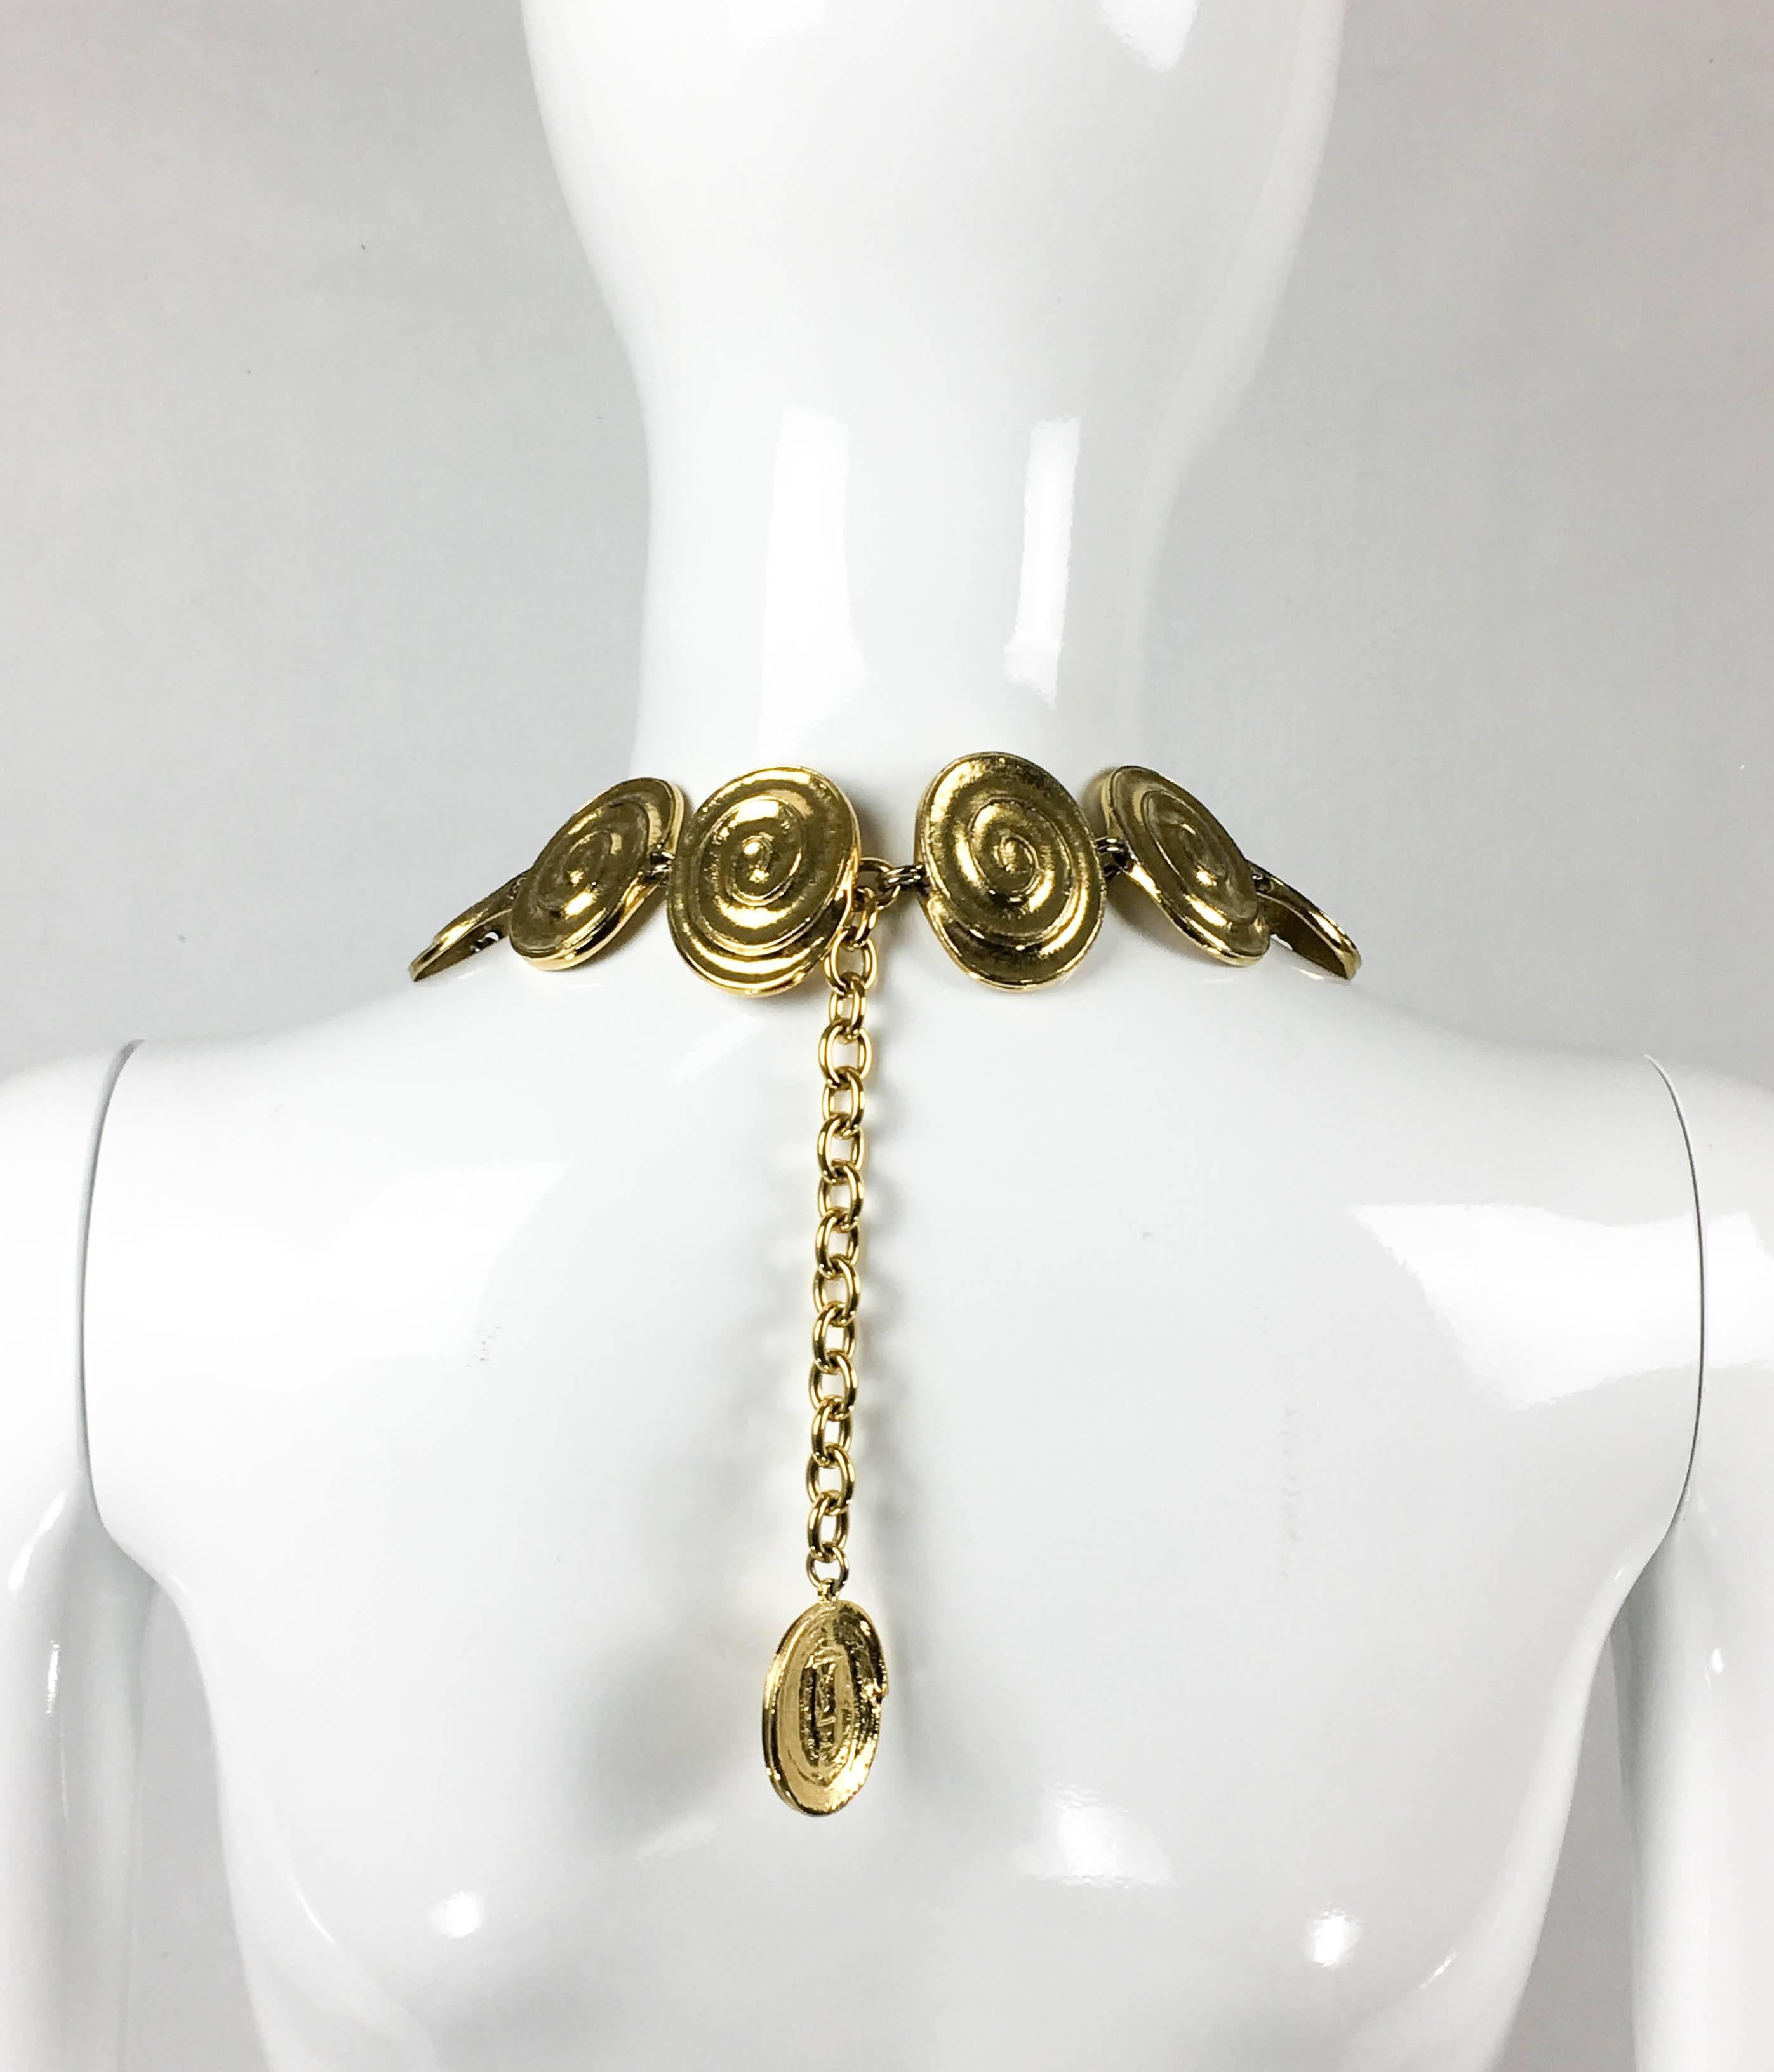 Yves Saint Laurent Gold-Plated 'Spiral' Belt / Necklace - 1980's 1